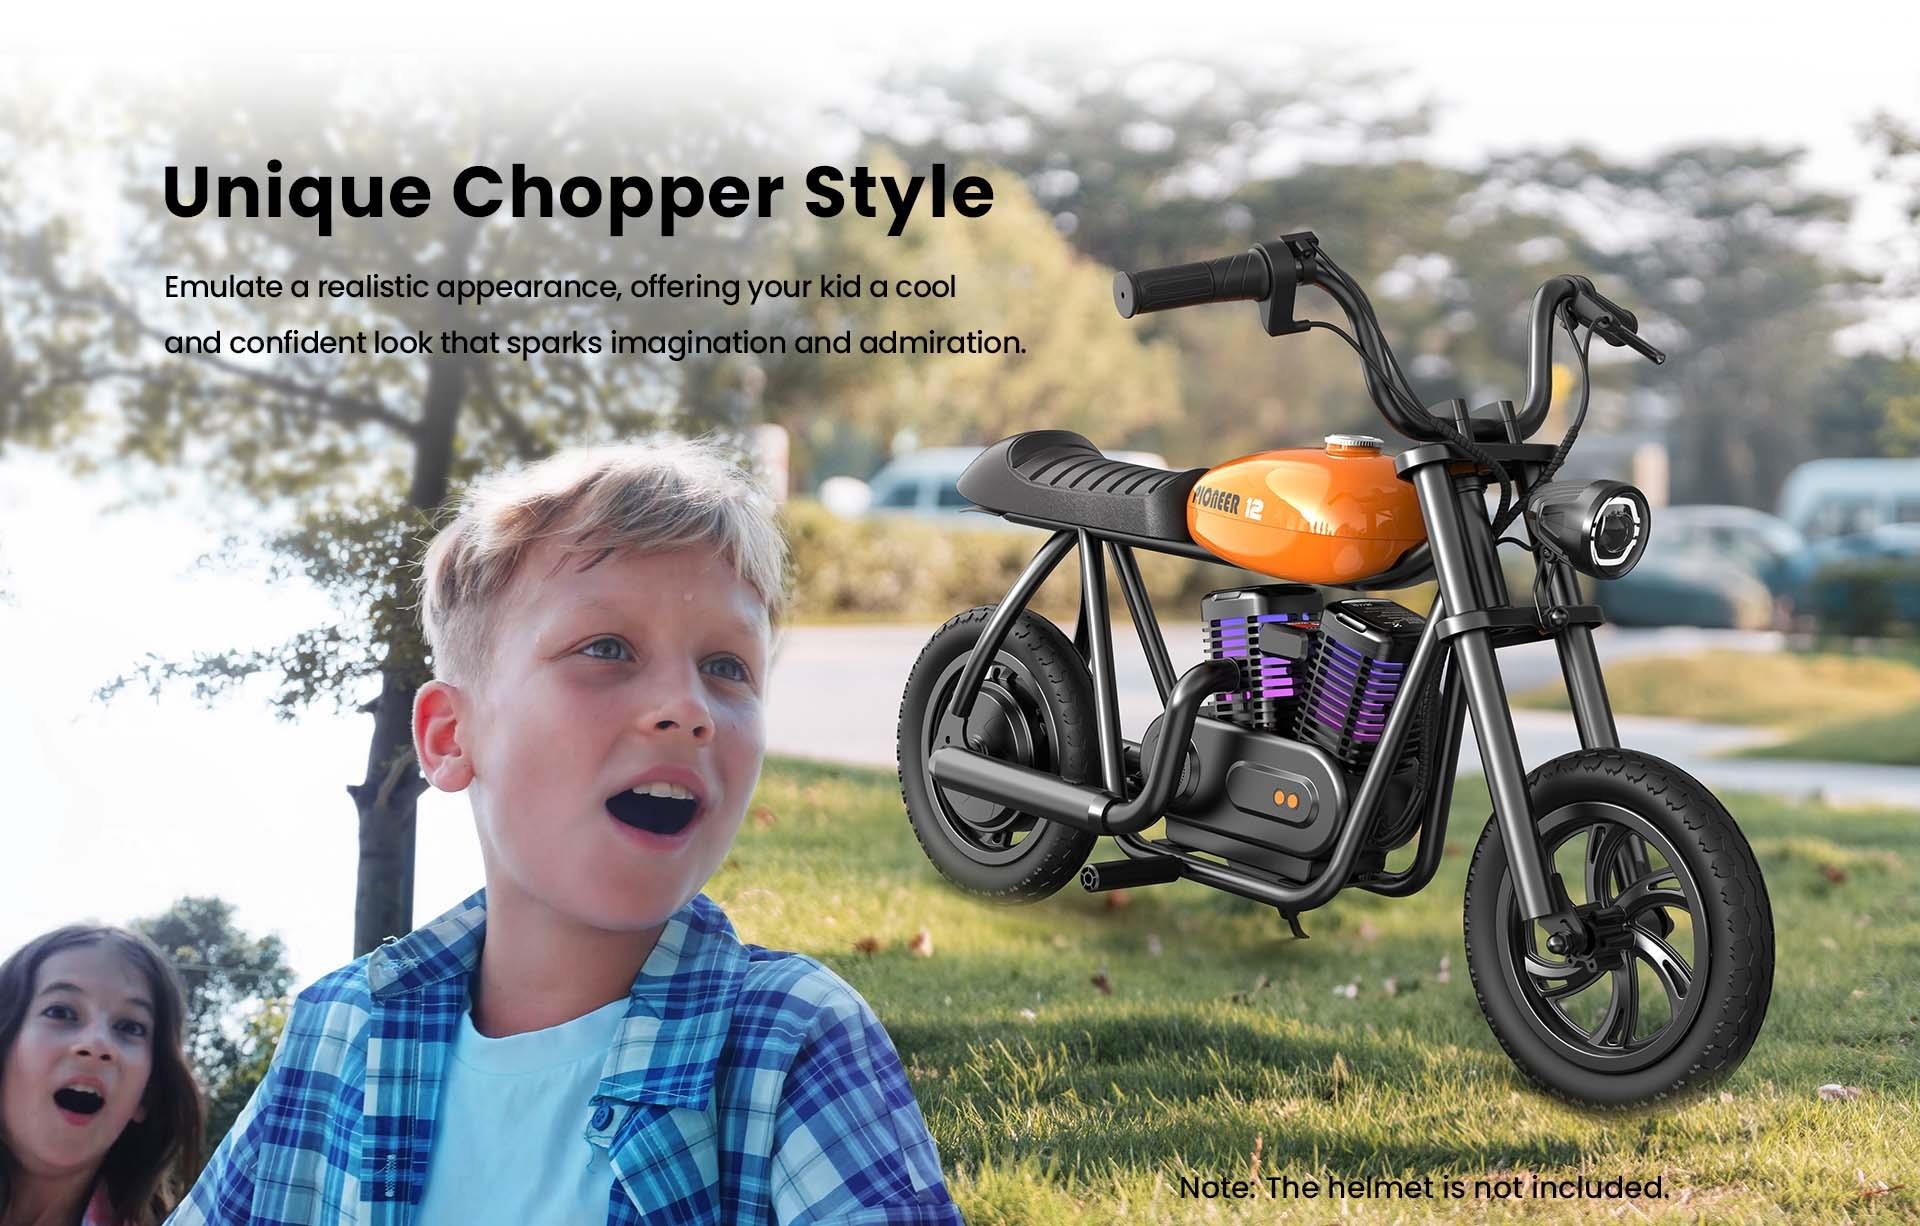 HYPER GOGO Pioneer 12 Plus Elektro-Chopper-Motorrad für Kinder, 21,9V 5.2Ah 160W, 12x3 Reifen, 12KM - Schwarz